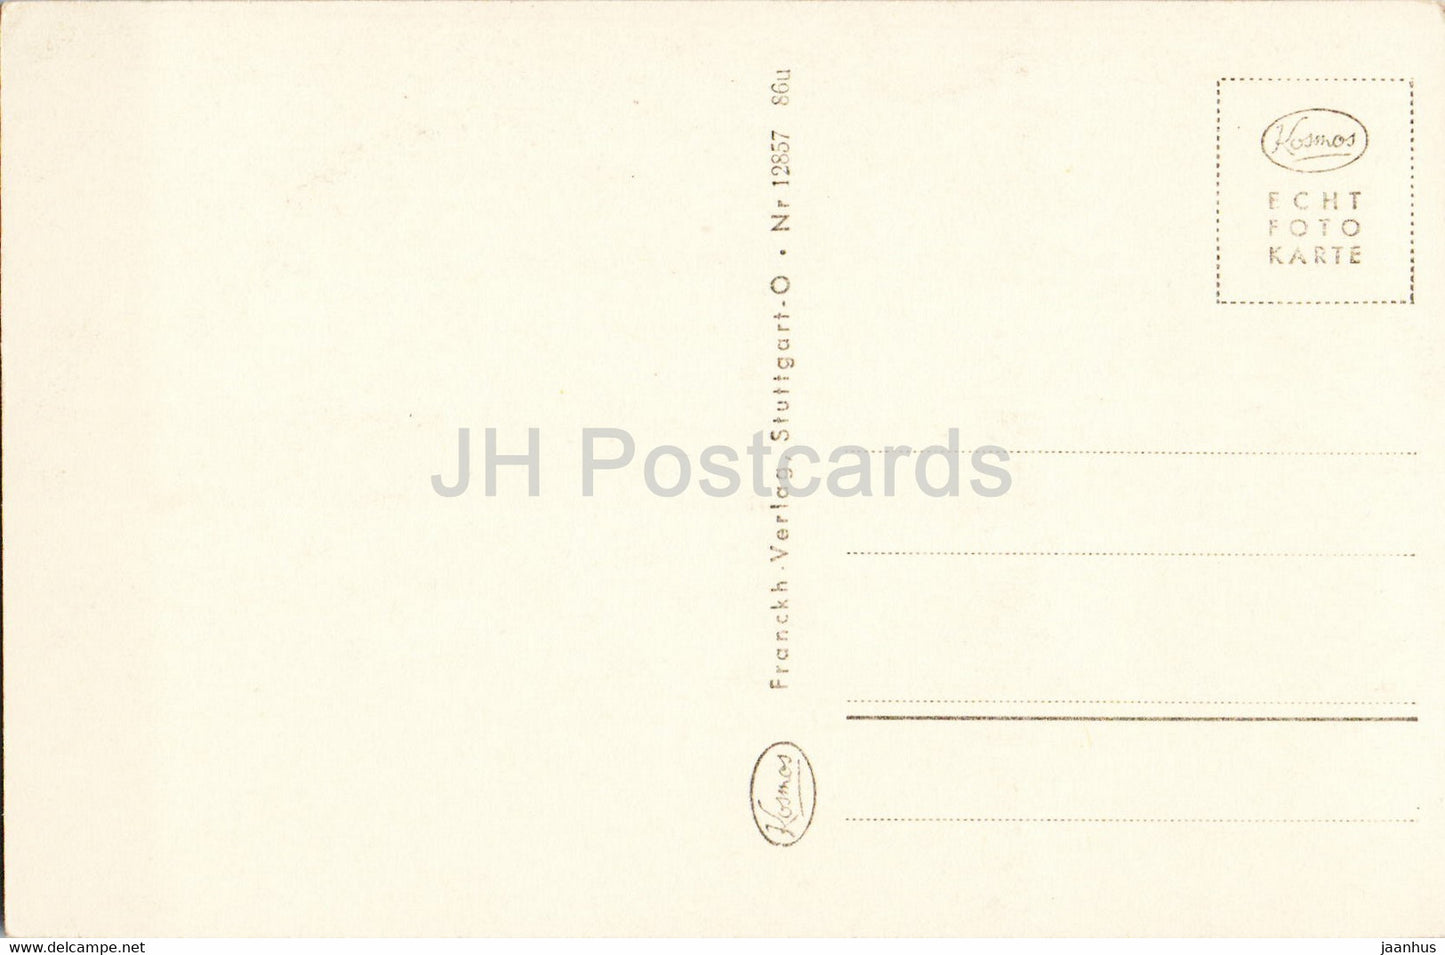 Am Bodensee - 12857 - carte postale ancienne - Allemagne - inutilisée